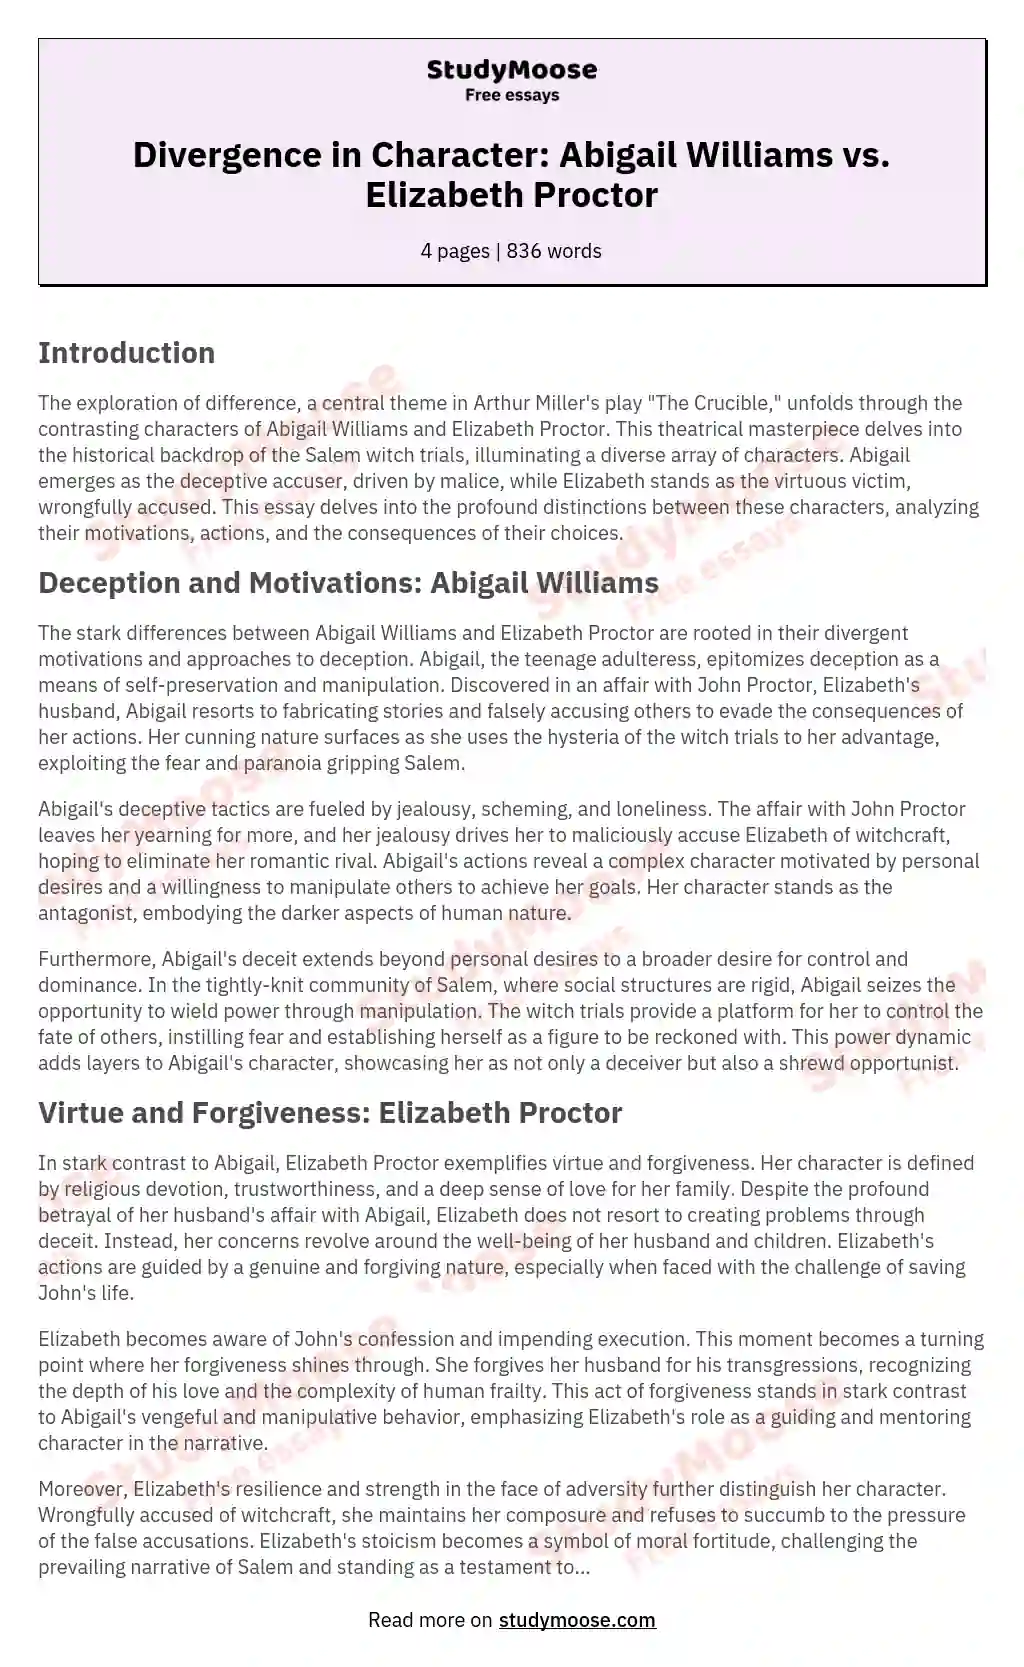 Love over Lust: Elizabeth Proctor vs. Abigail Williams